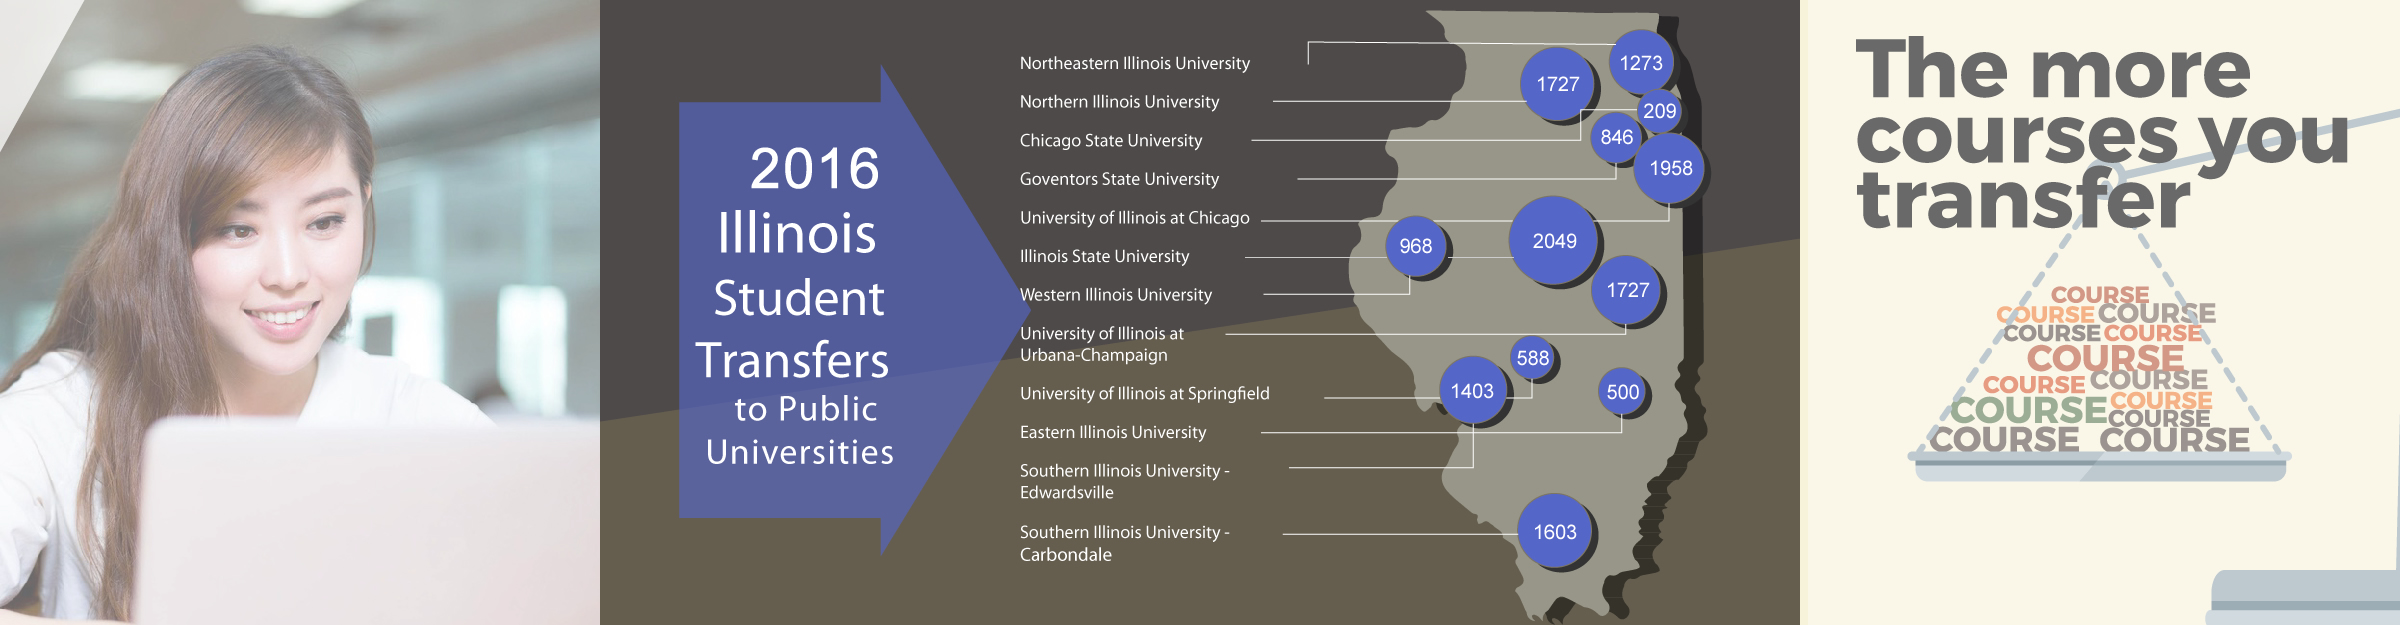 Illinois has signifigant transfer to public universities